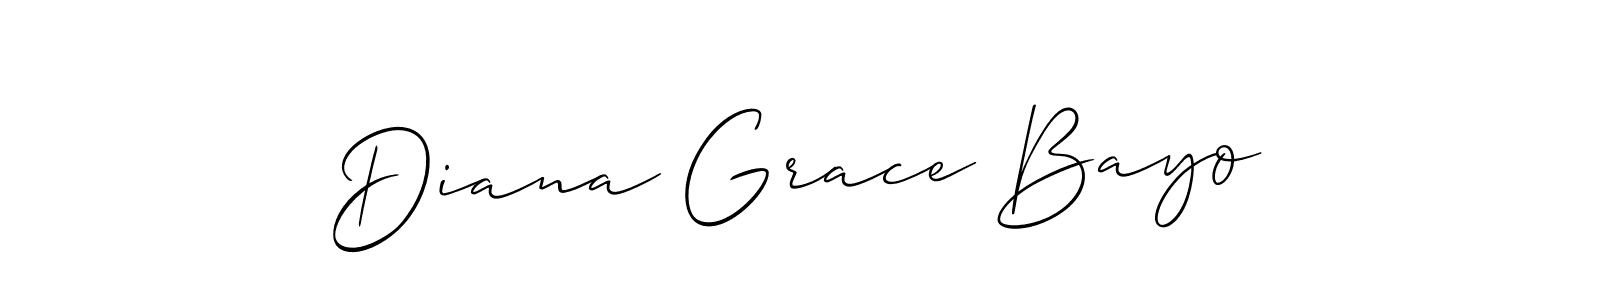 82+ Diana Grace Bayo Name Signature Style Ideas | Great Electronic ...